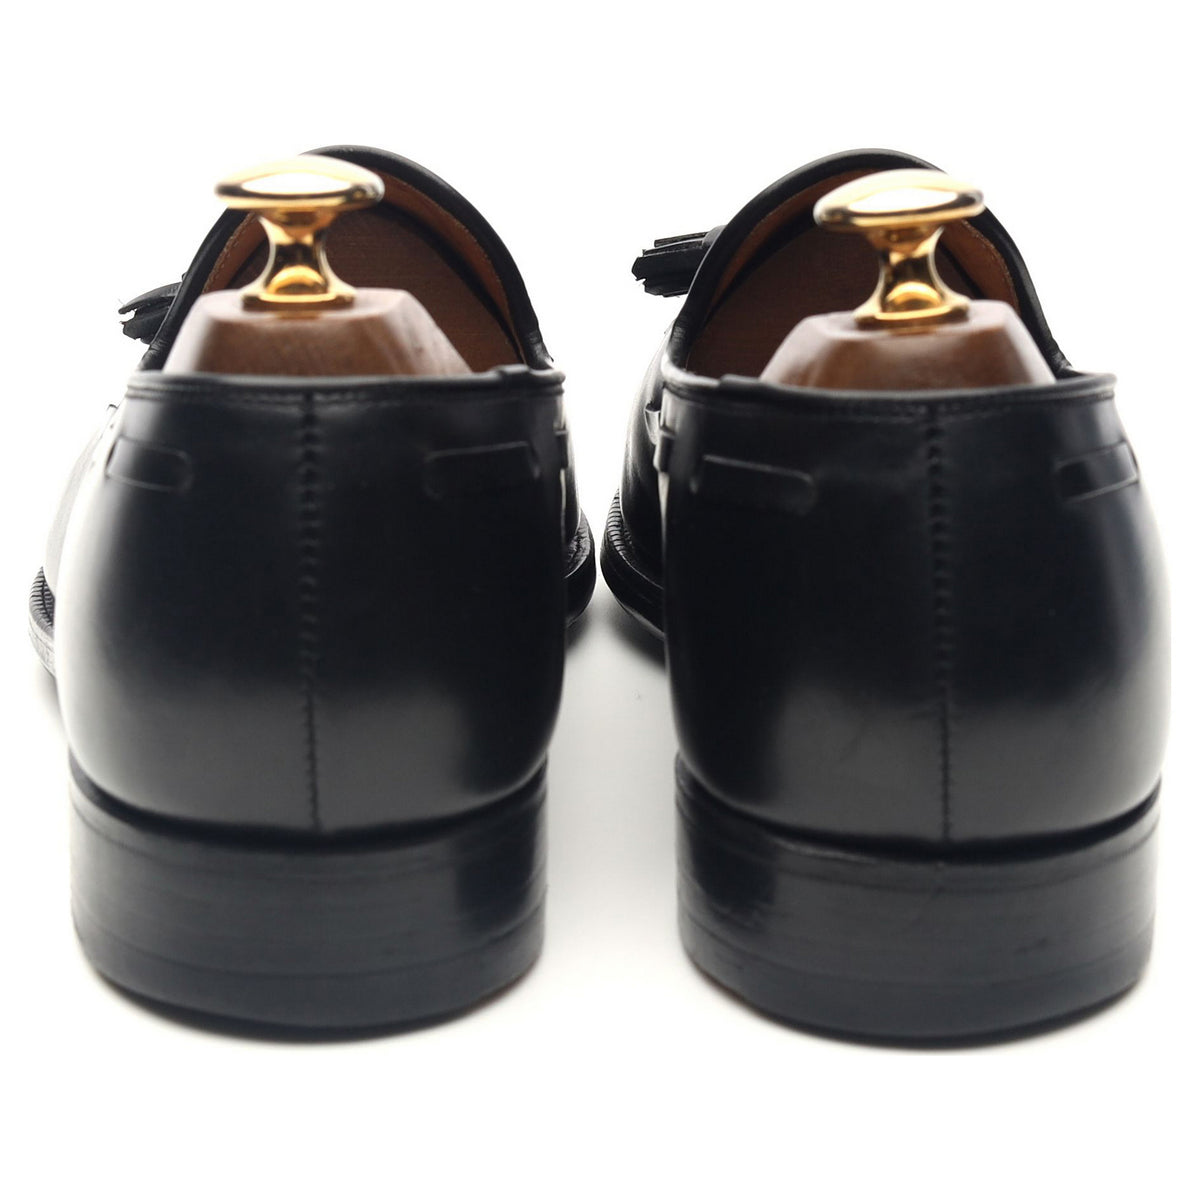 &#39;Cavendish&#39; Black Leather Tassel Loafers UK 6 E